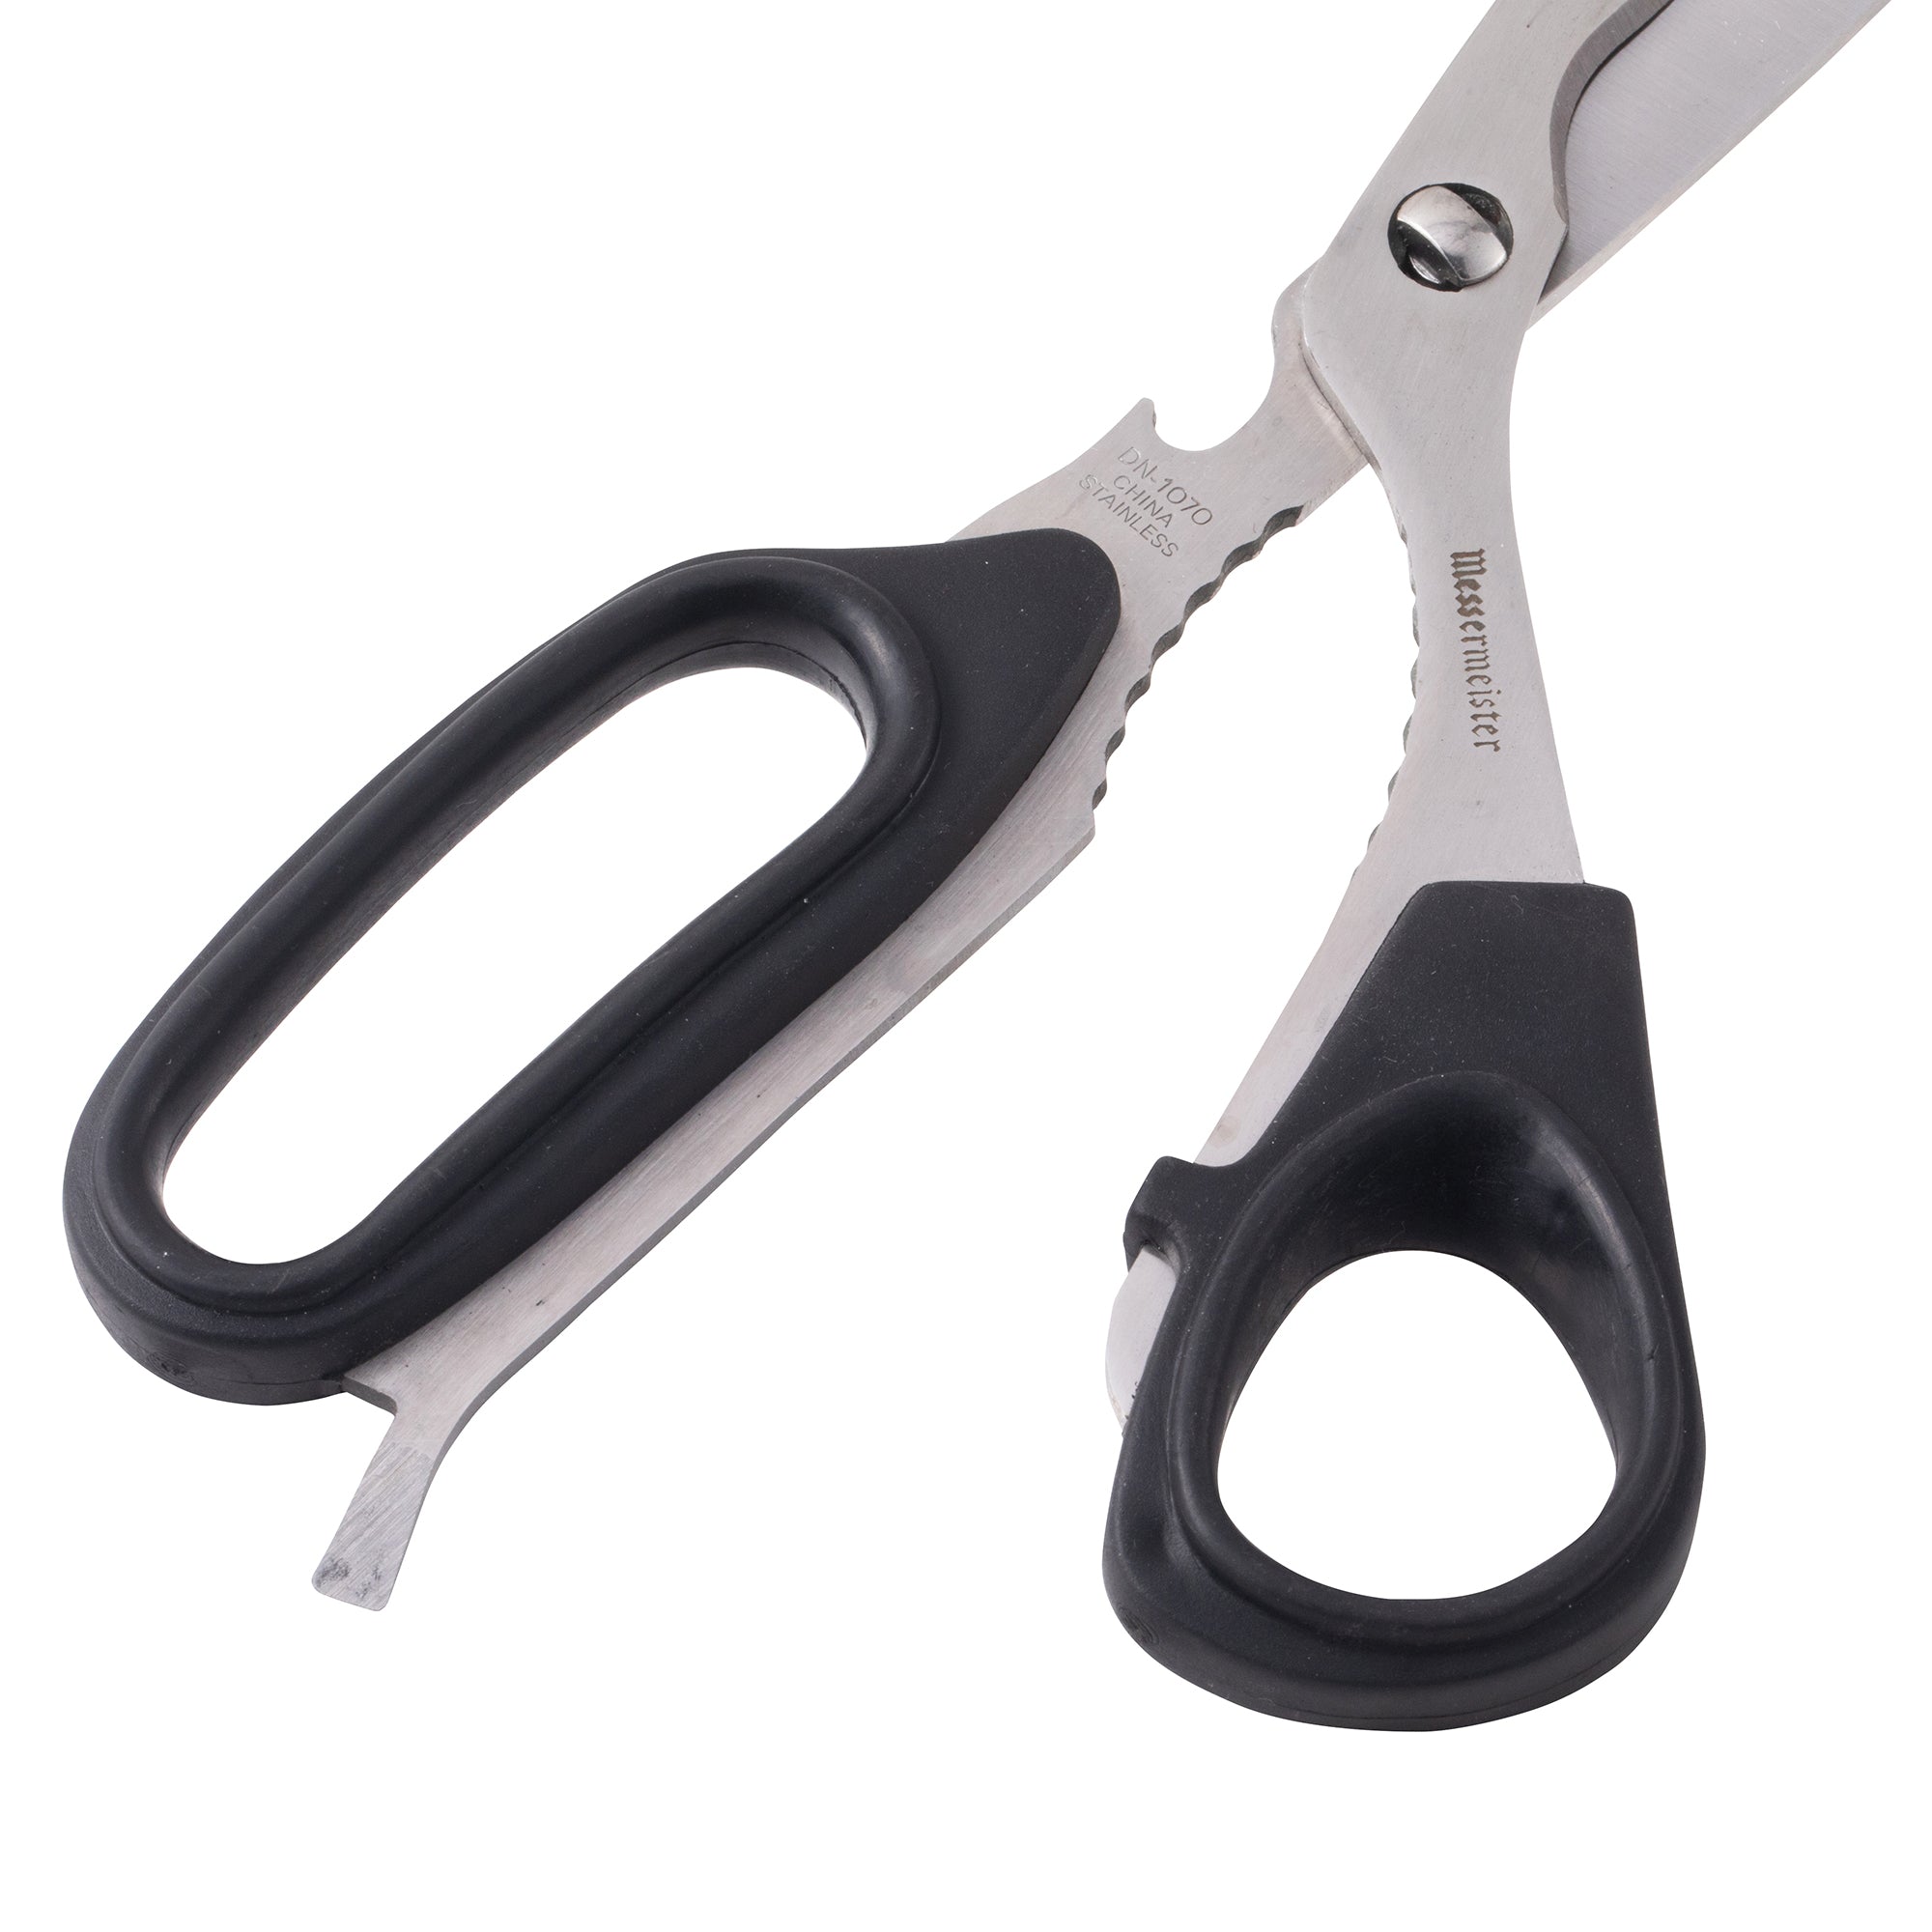 ☀️Shun DM7300 Multi-Purpose Shears, Heavy Duty Take-Apart Kitchen Scissors